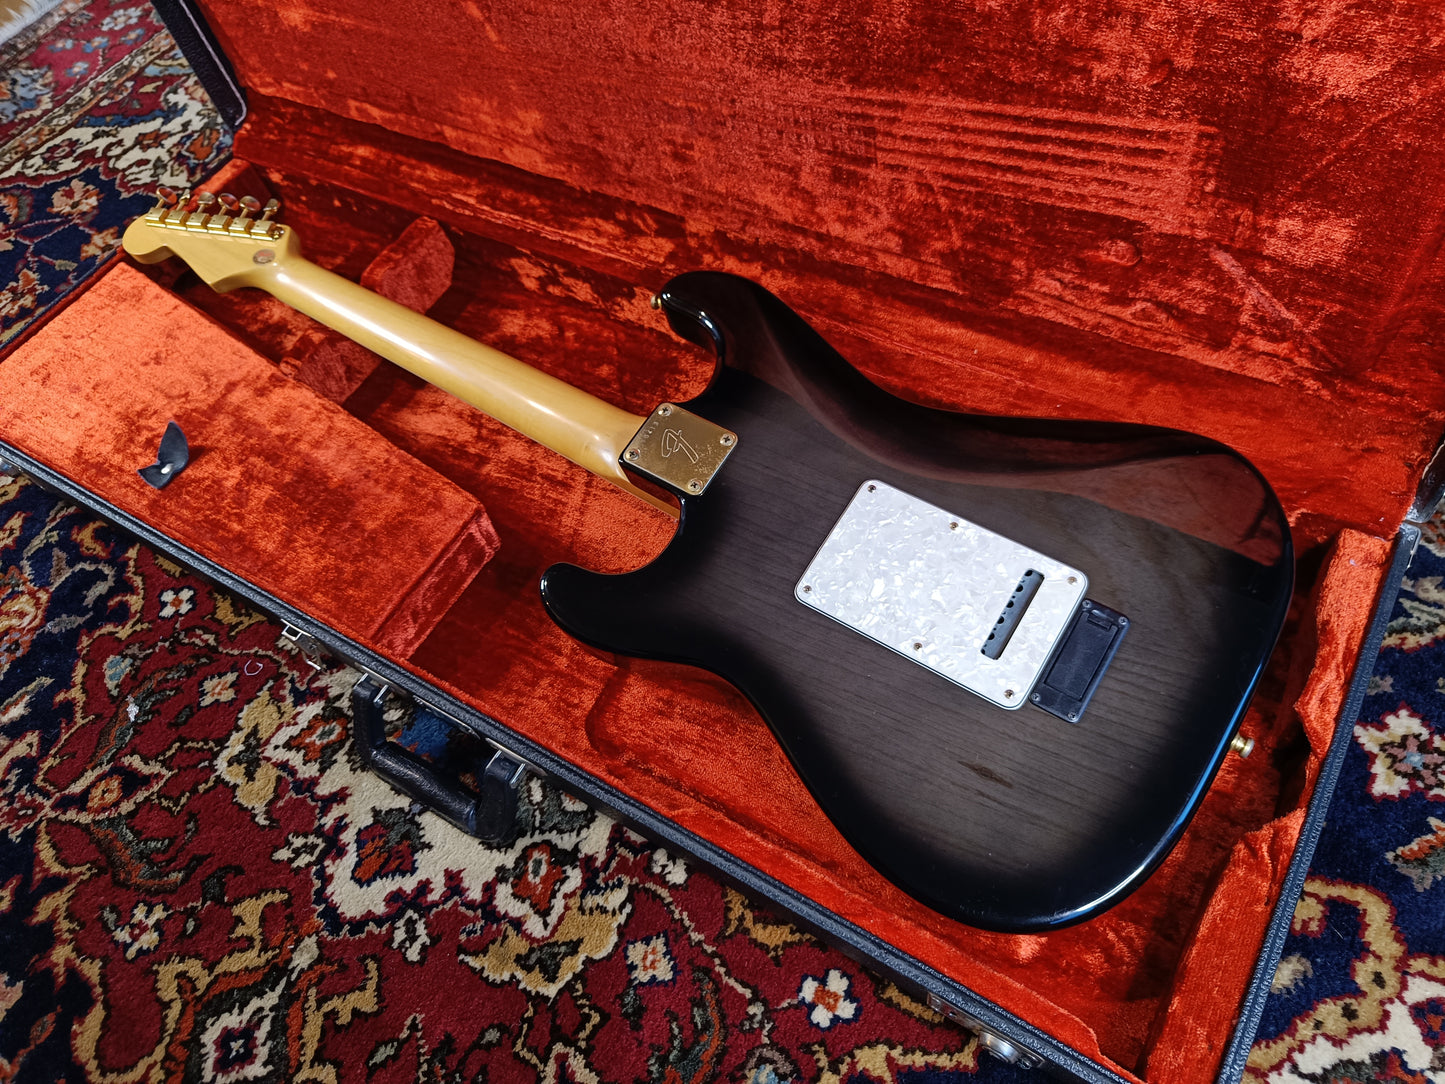 Fender The Ventures Stratocaster MIJ 1996 50th anniversary